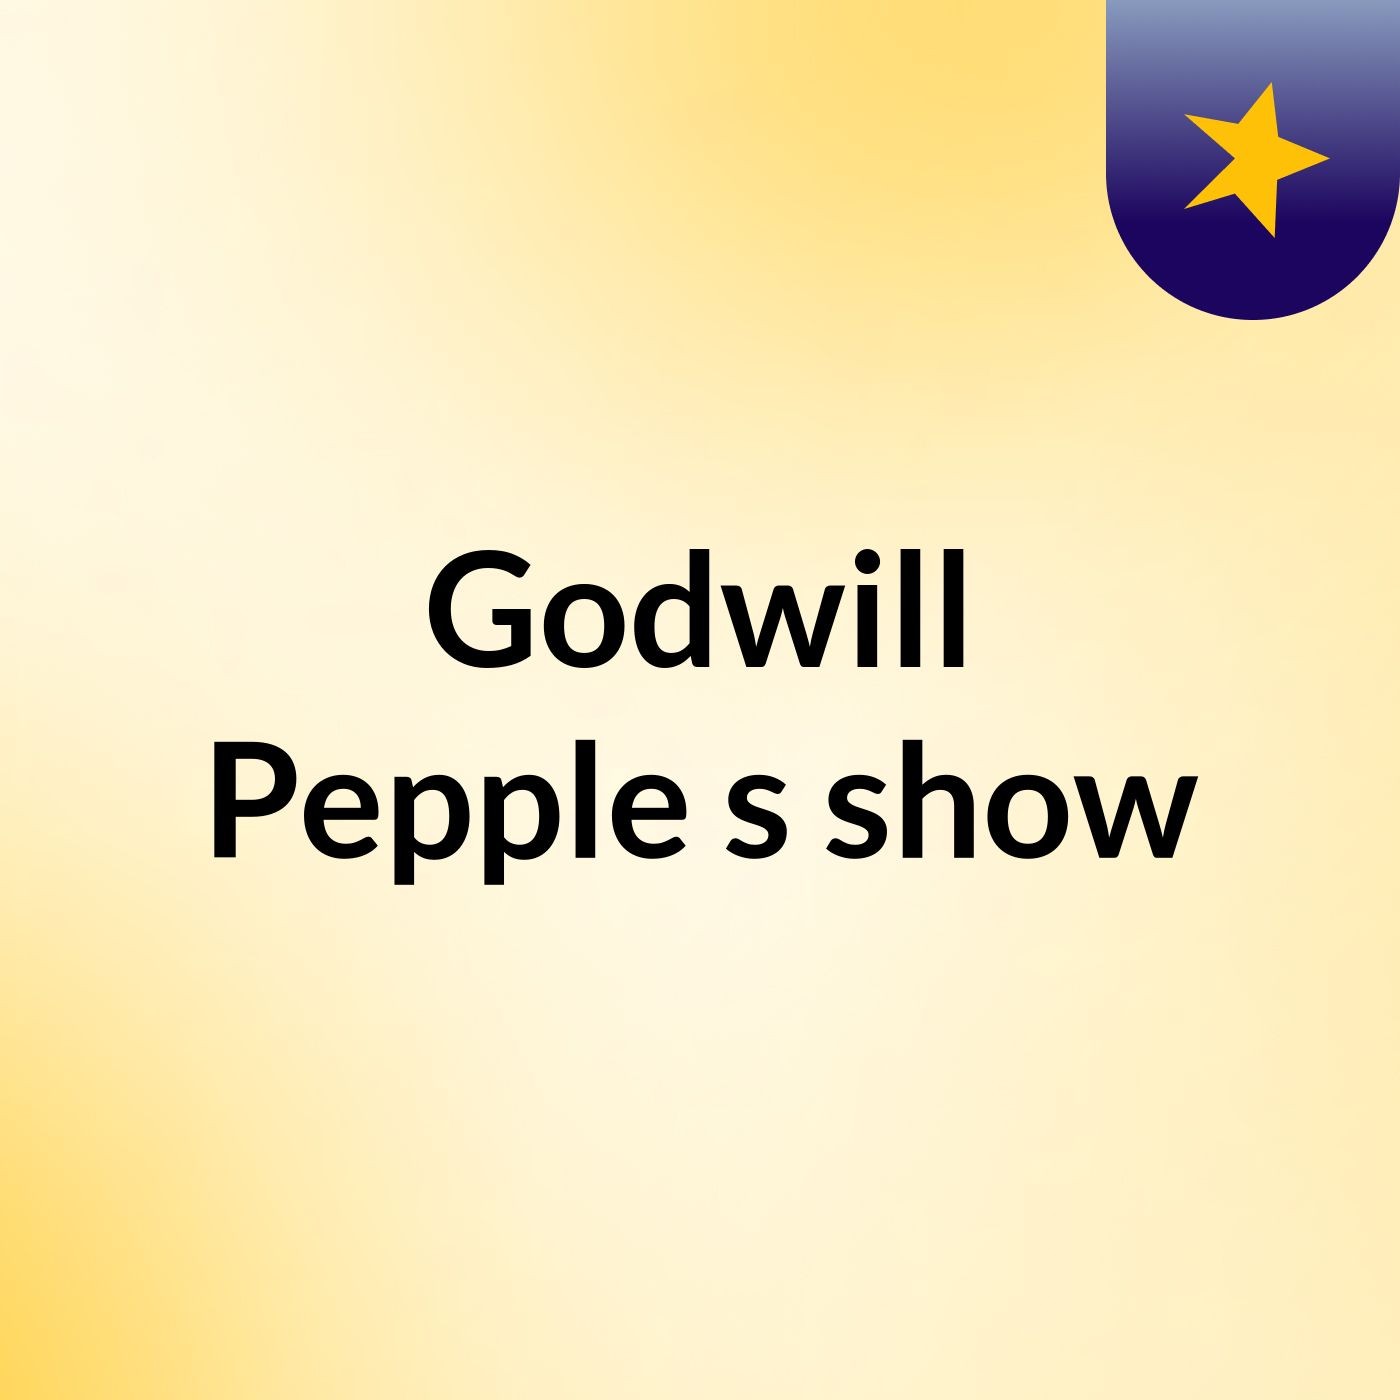 Godwill Pepple's show